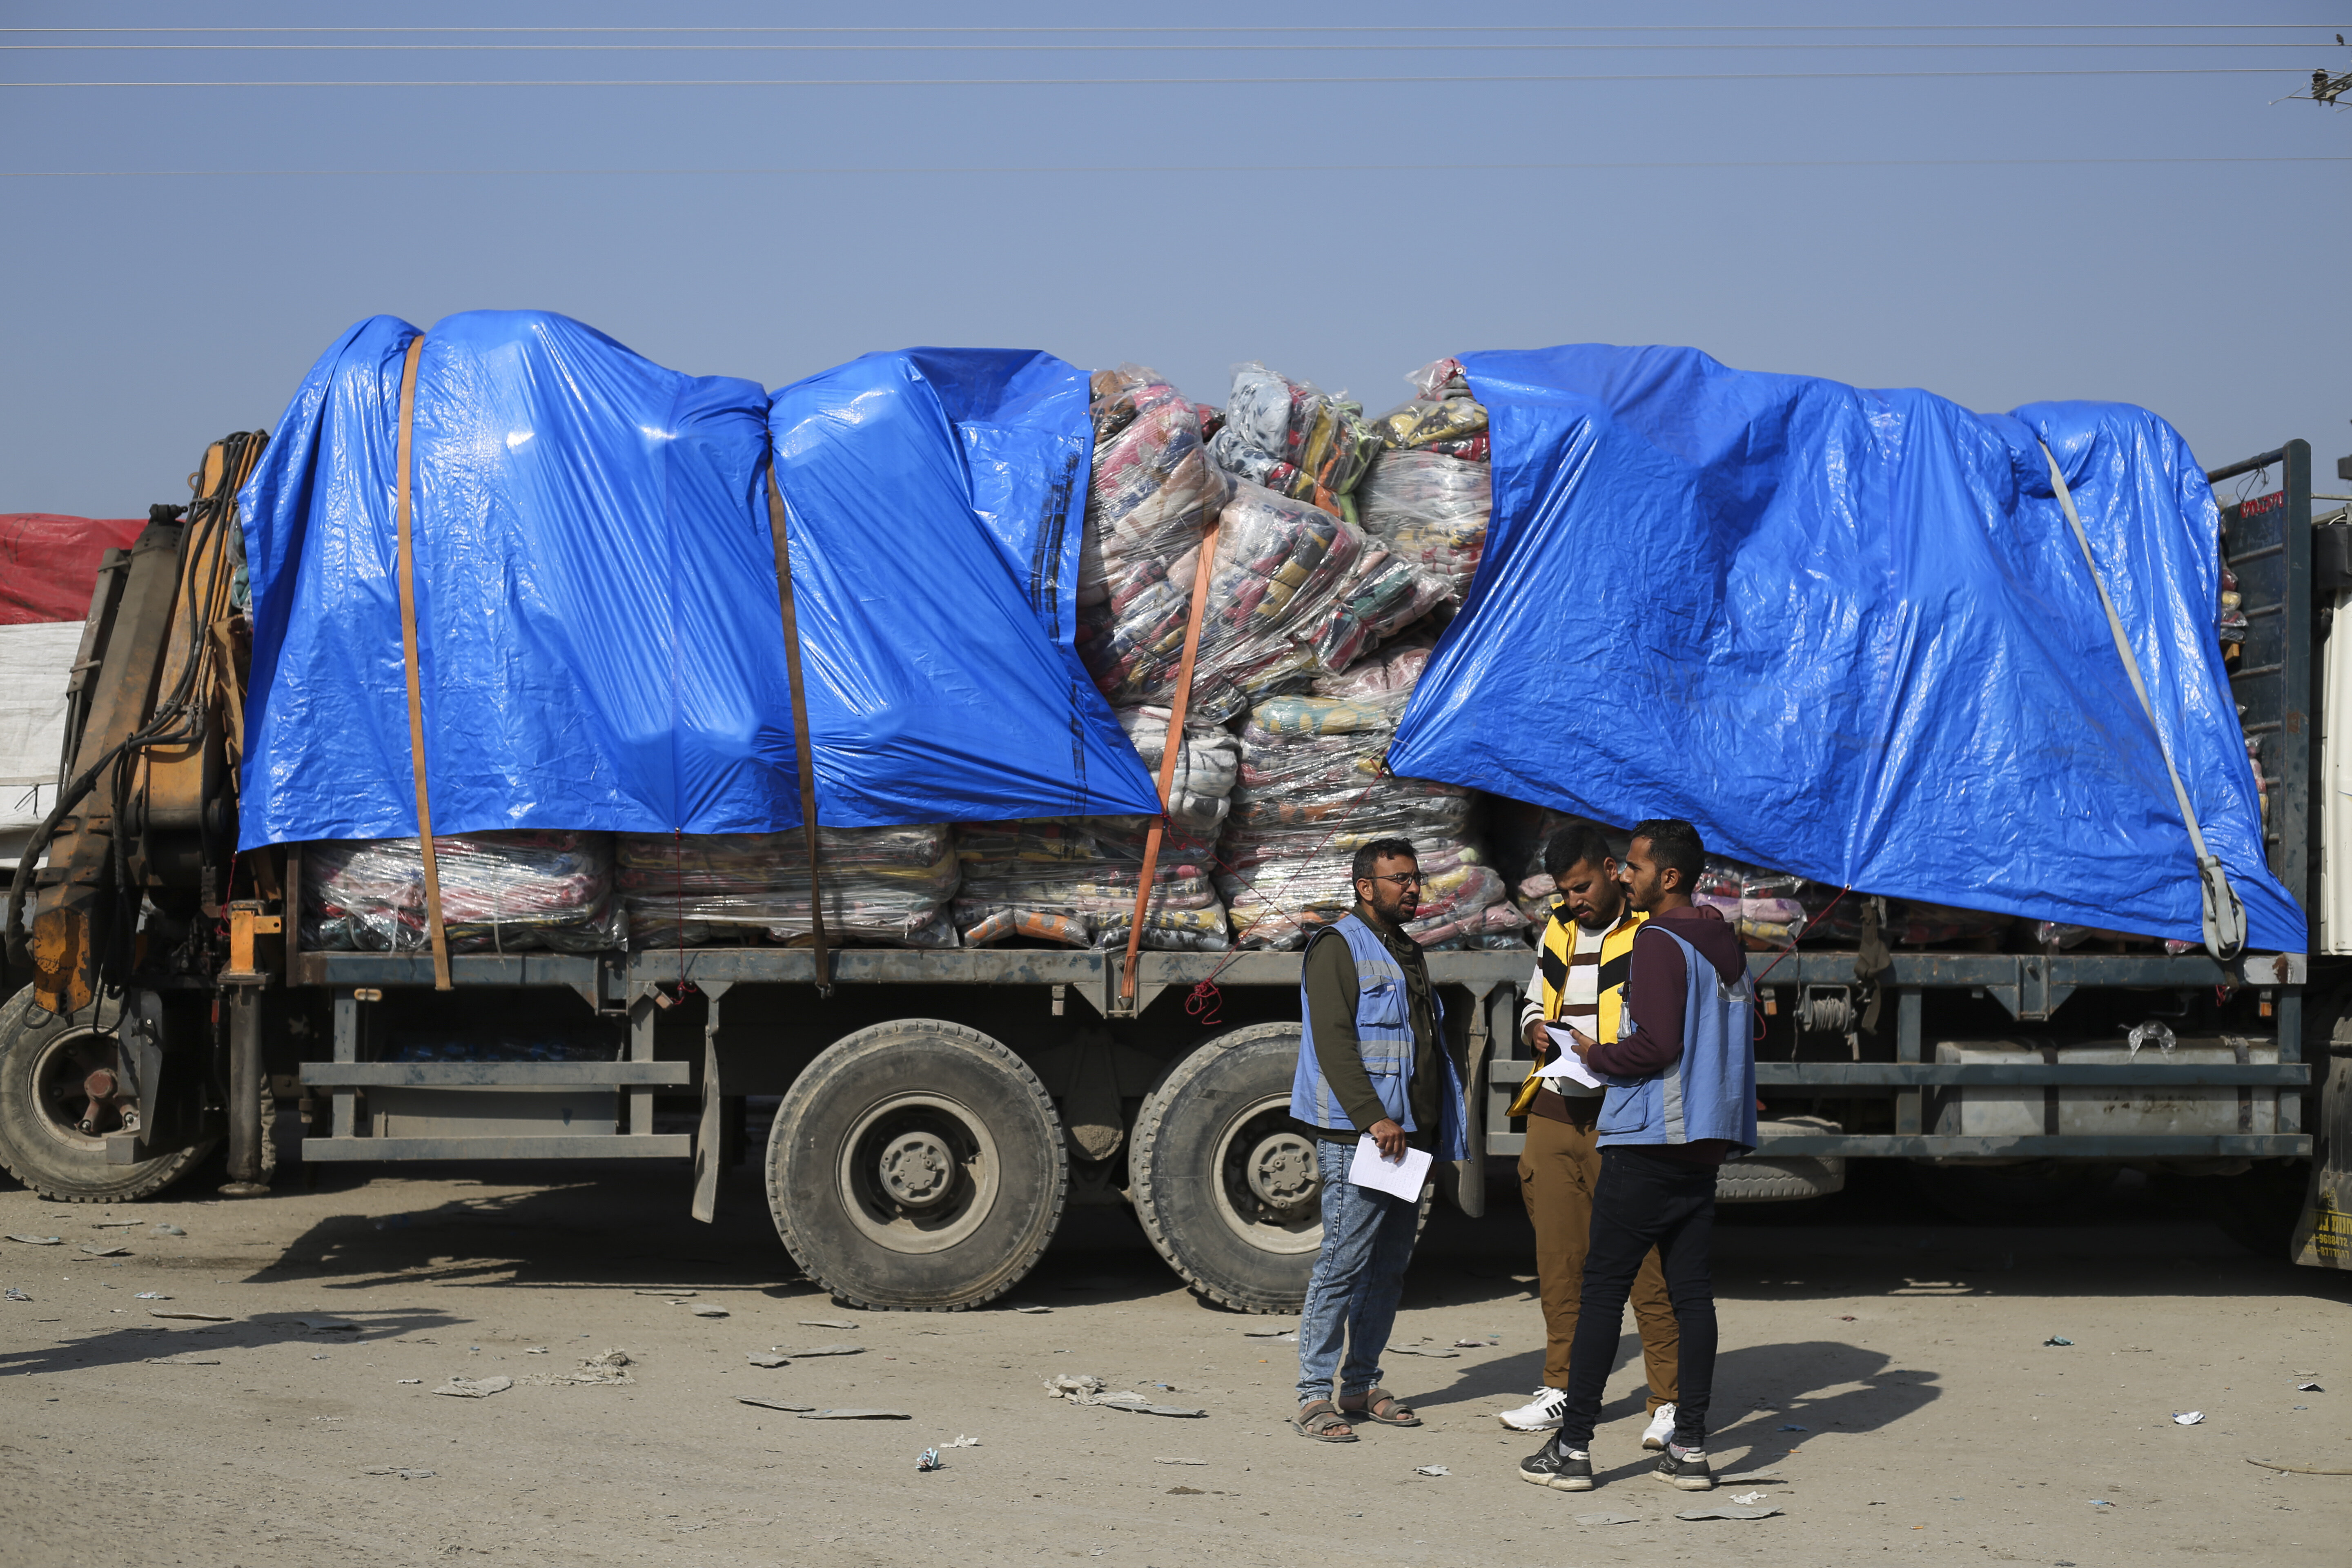 Humanitarian aid trucks enter through a crossing from Israel into the Gaza Strip on Dec. 18.